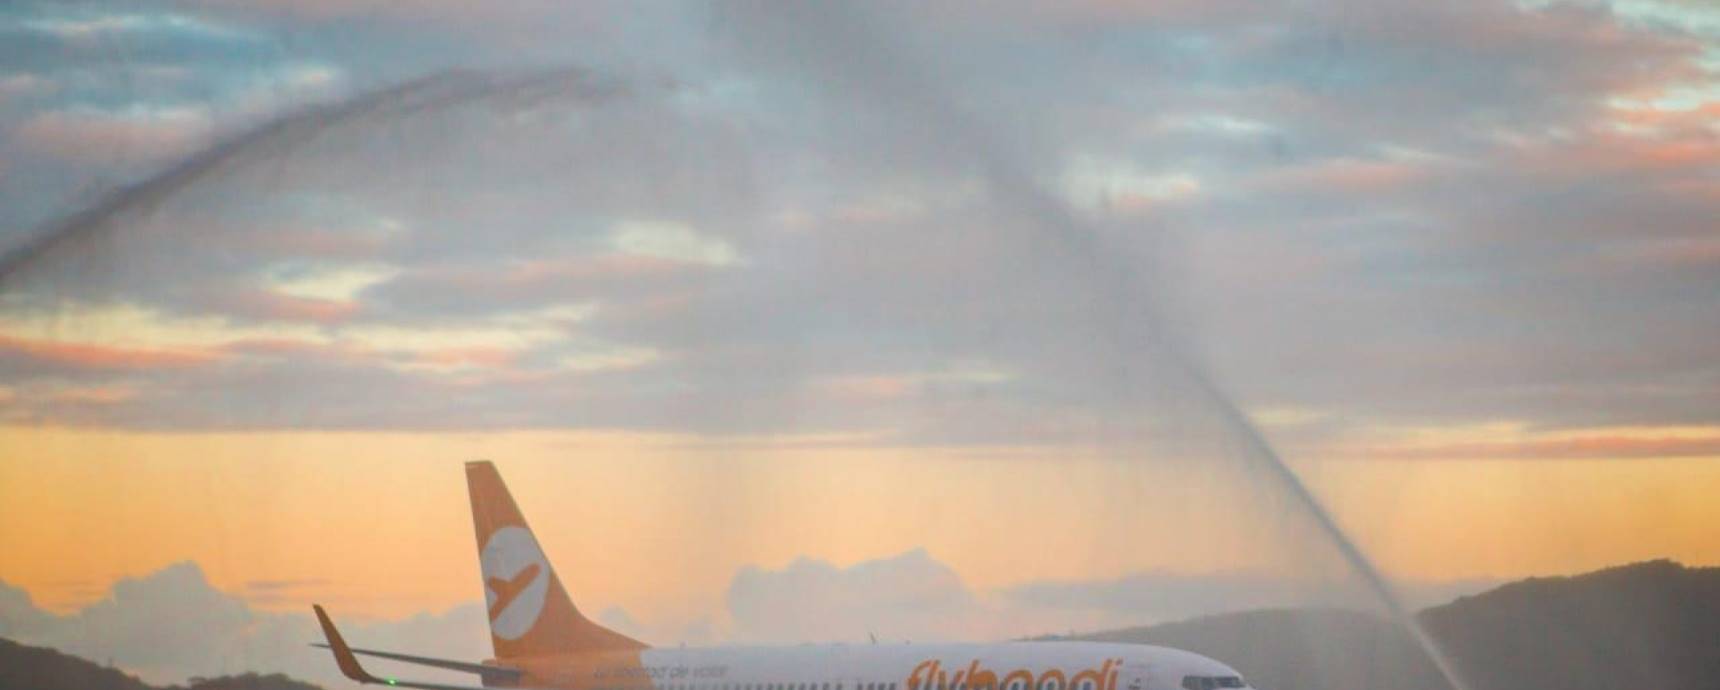 Cia aérea low cost Flybondi inaugura voo entre Florianópolis e Buenos Aires